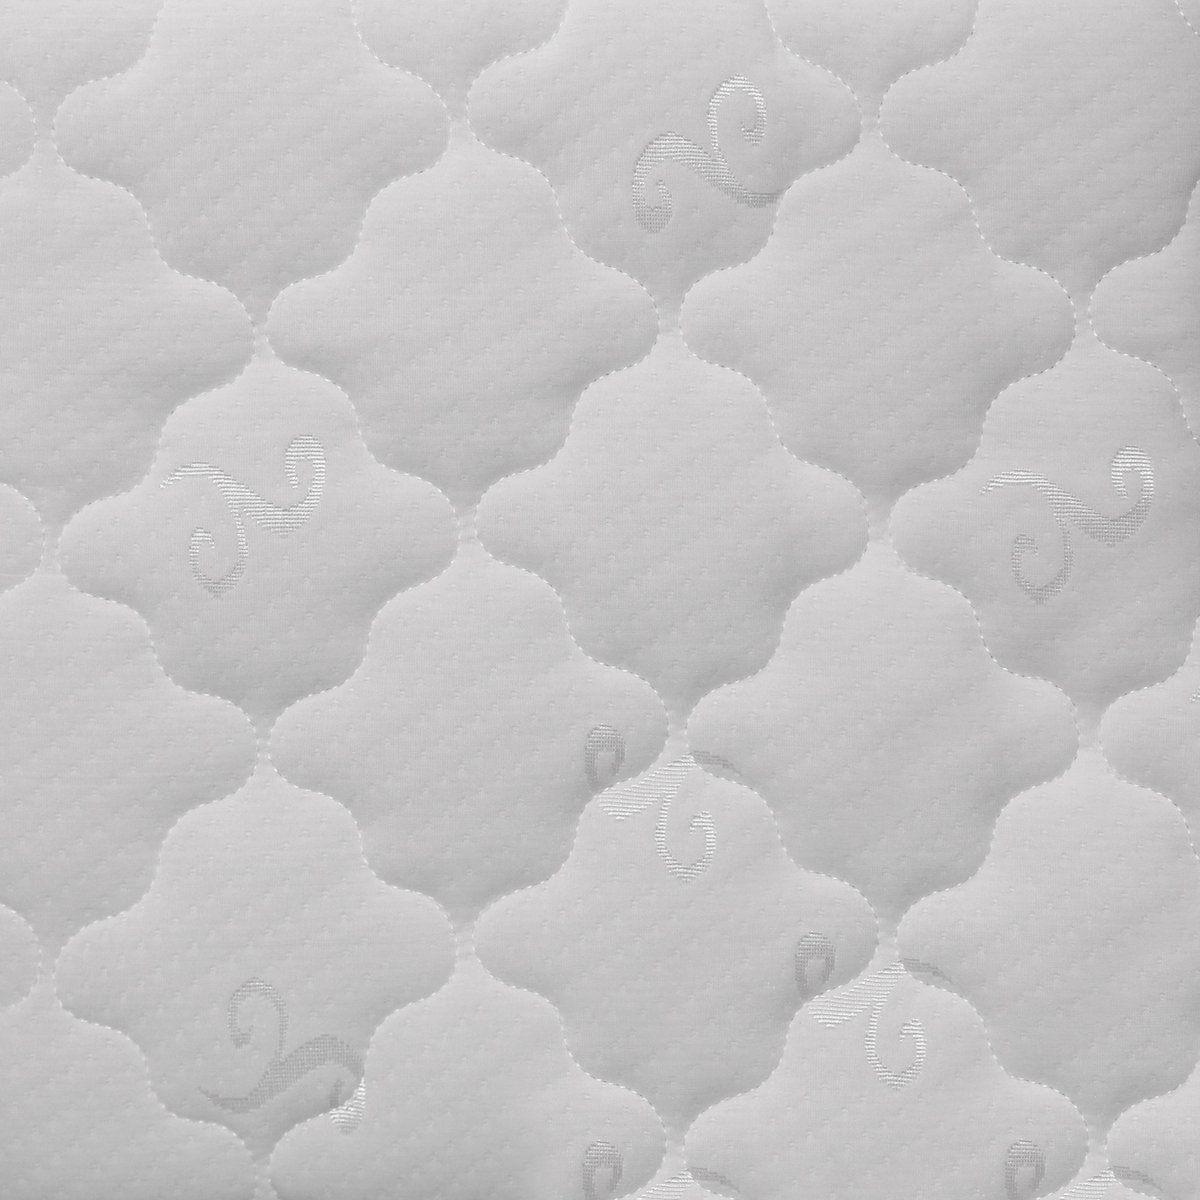 Cotton Home Imperial Pocket Spring Mattress 180x200+30cm-Pillow Top